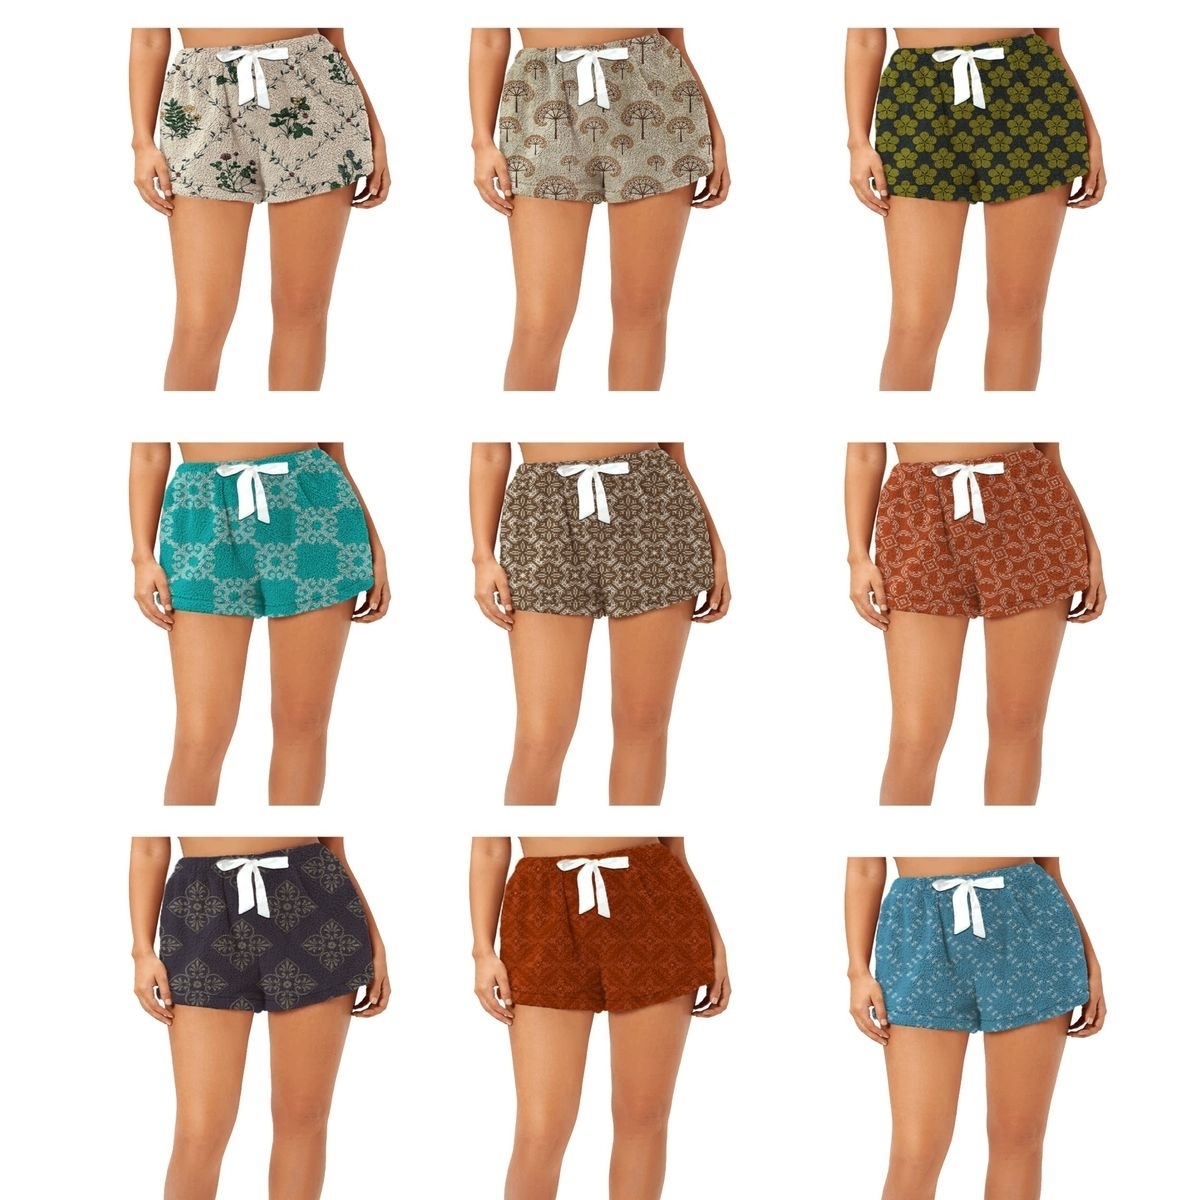 5-Pack: Women's Ultra Plush Micro-Fleece Soft Printed Pajama Shorts - X-large, Love